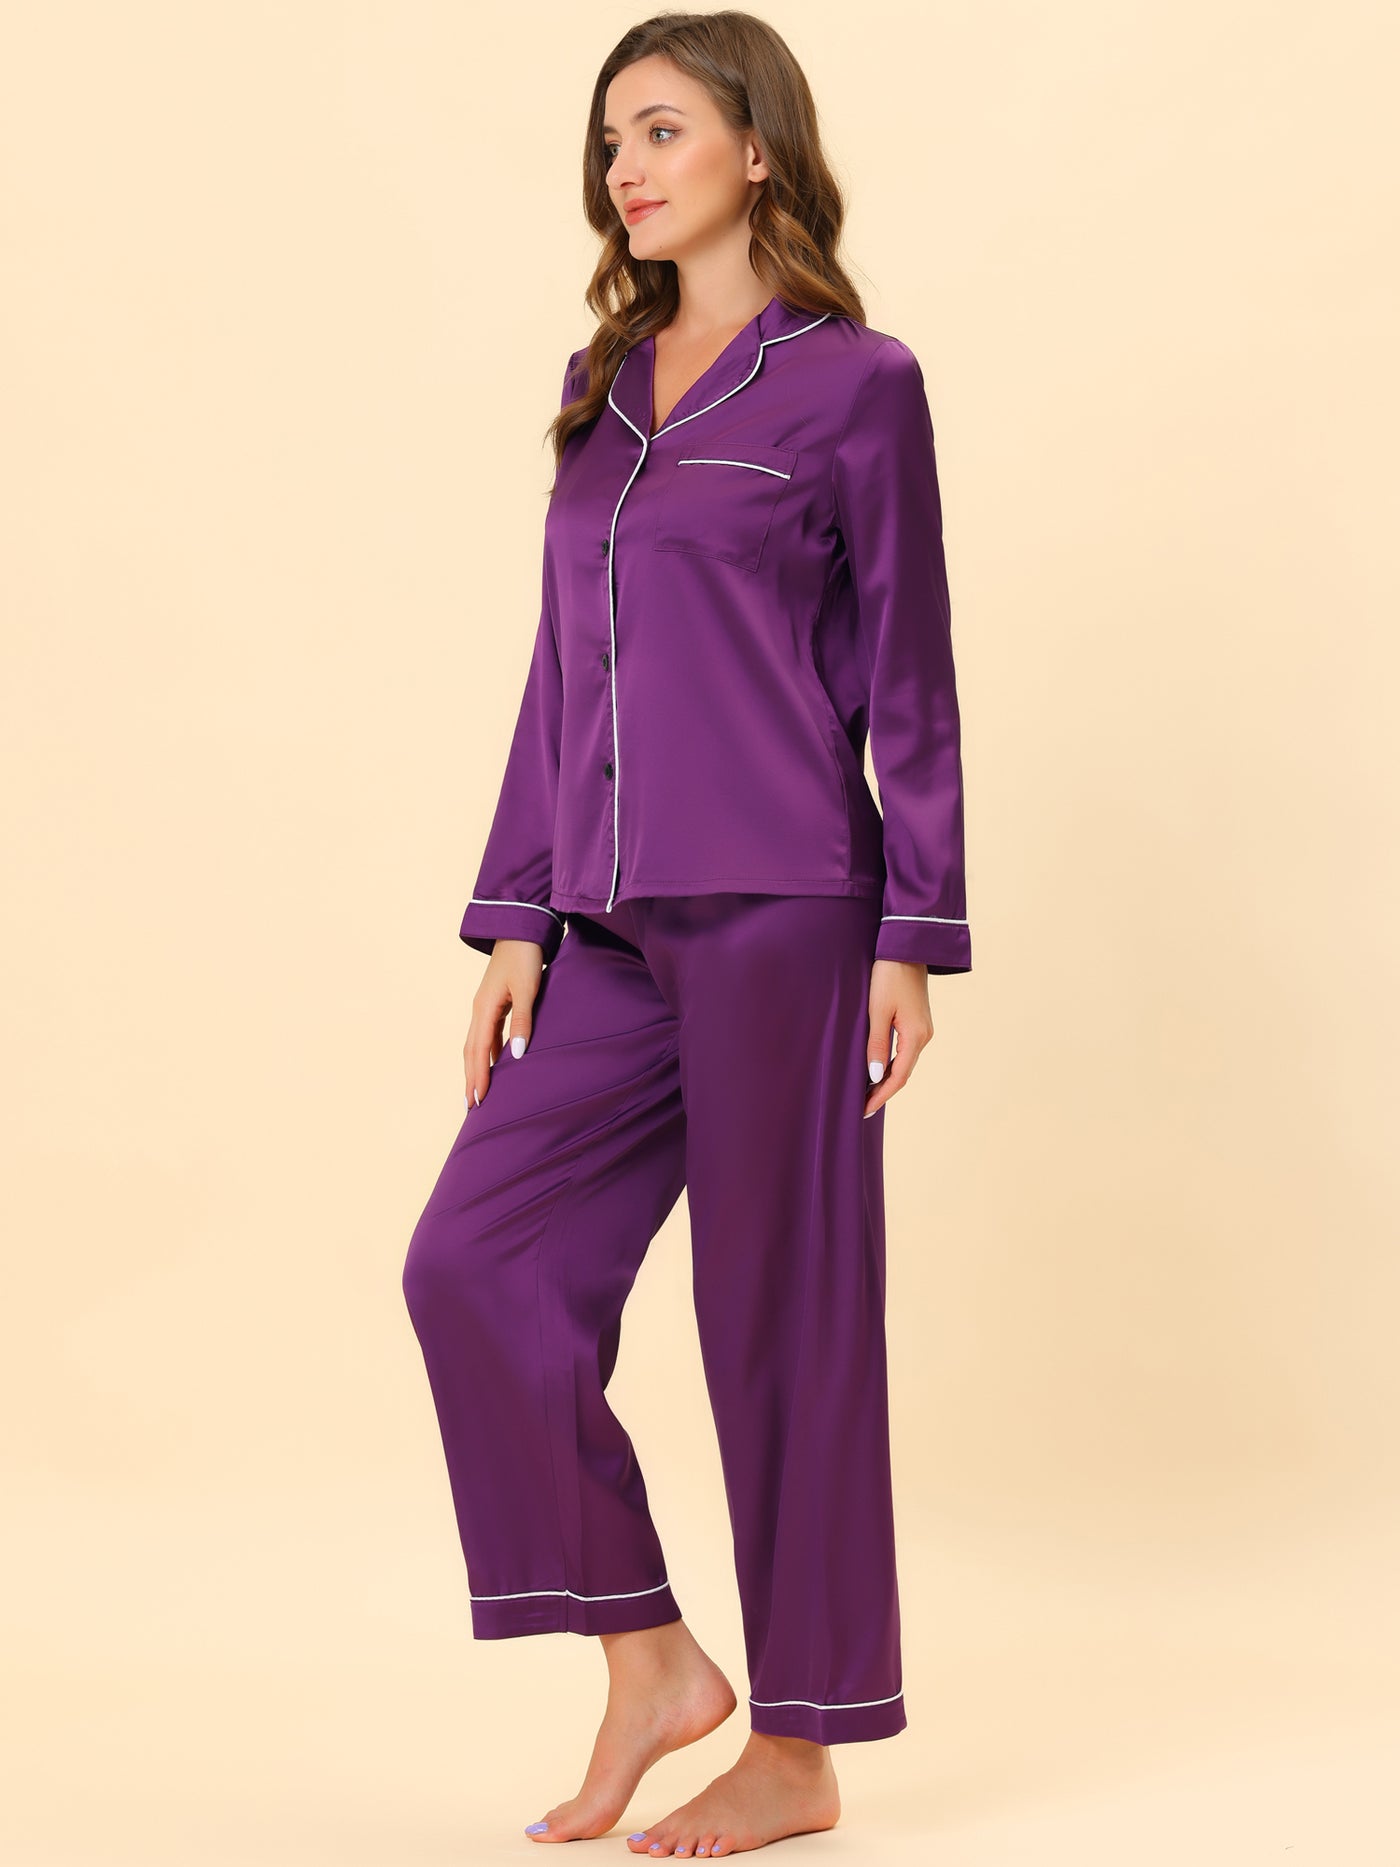 Bublédon Women's Pajama Loungewear Long Sleeves Tops and Pants Satin Sets